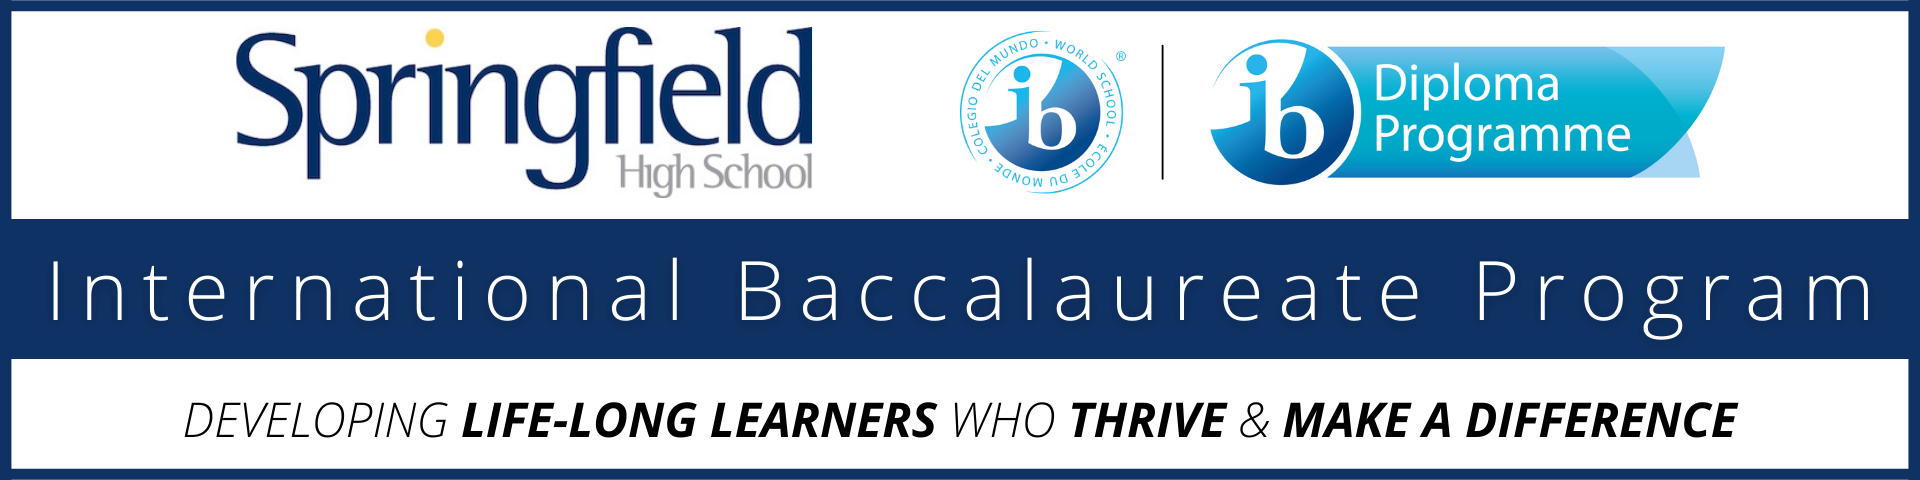 Springfield High School International Baccalaureate Program Logo